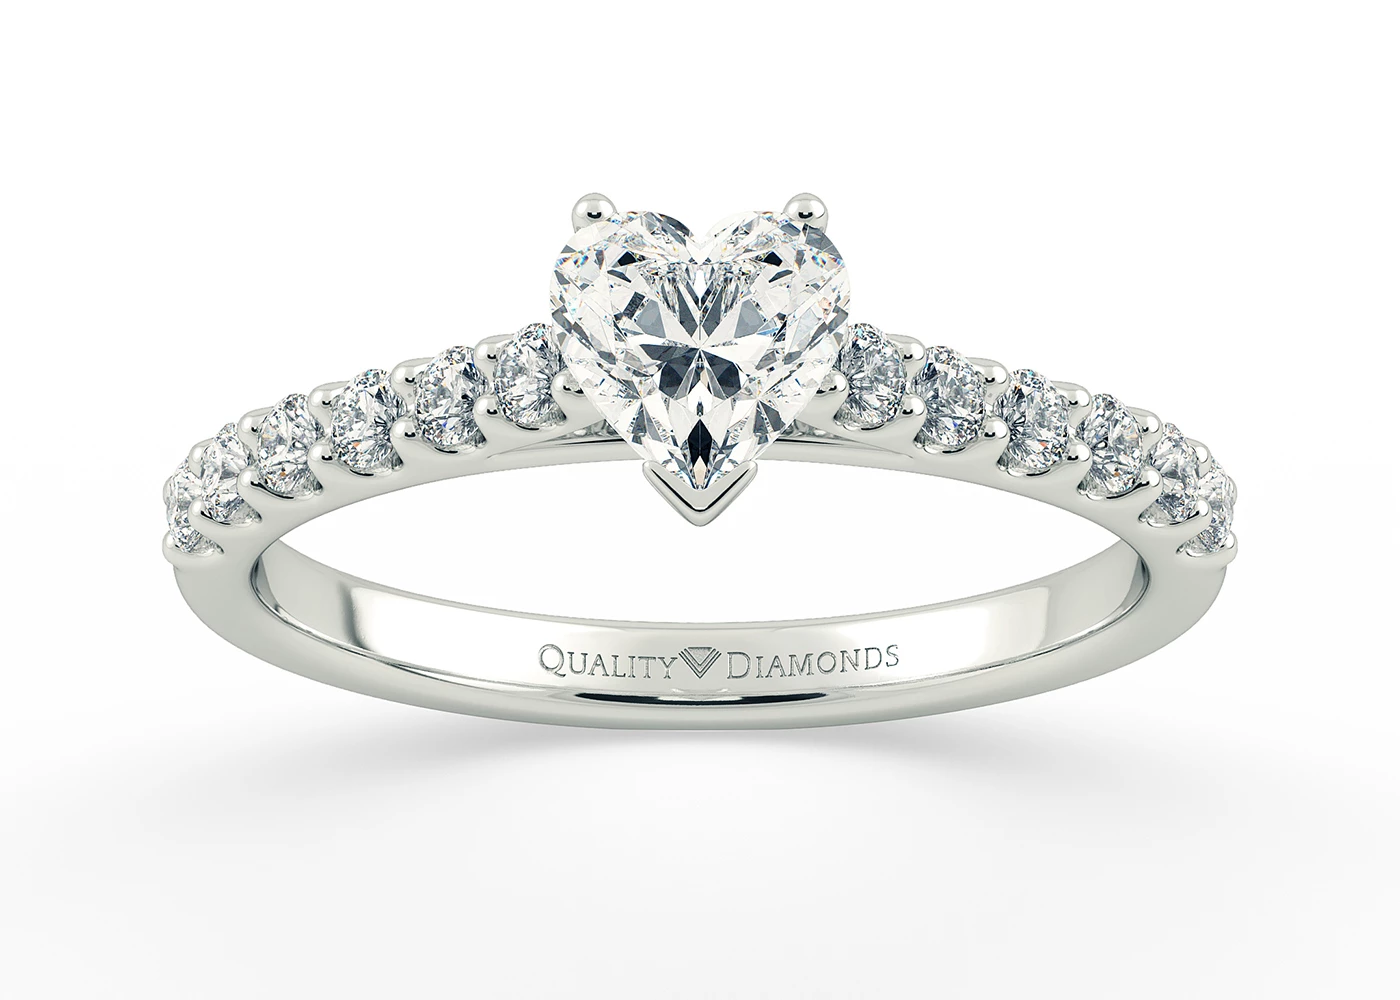 Two Carat Heart Diamond Set Diamond Engagement Ring in Platinum 950